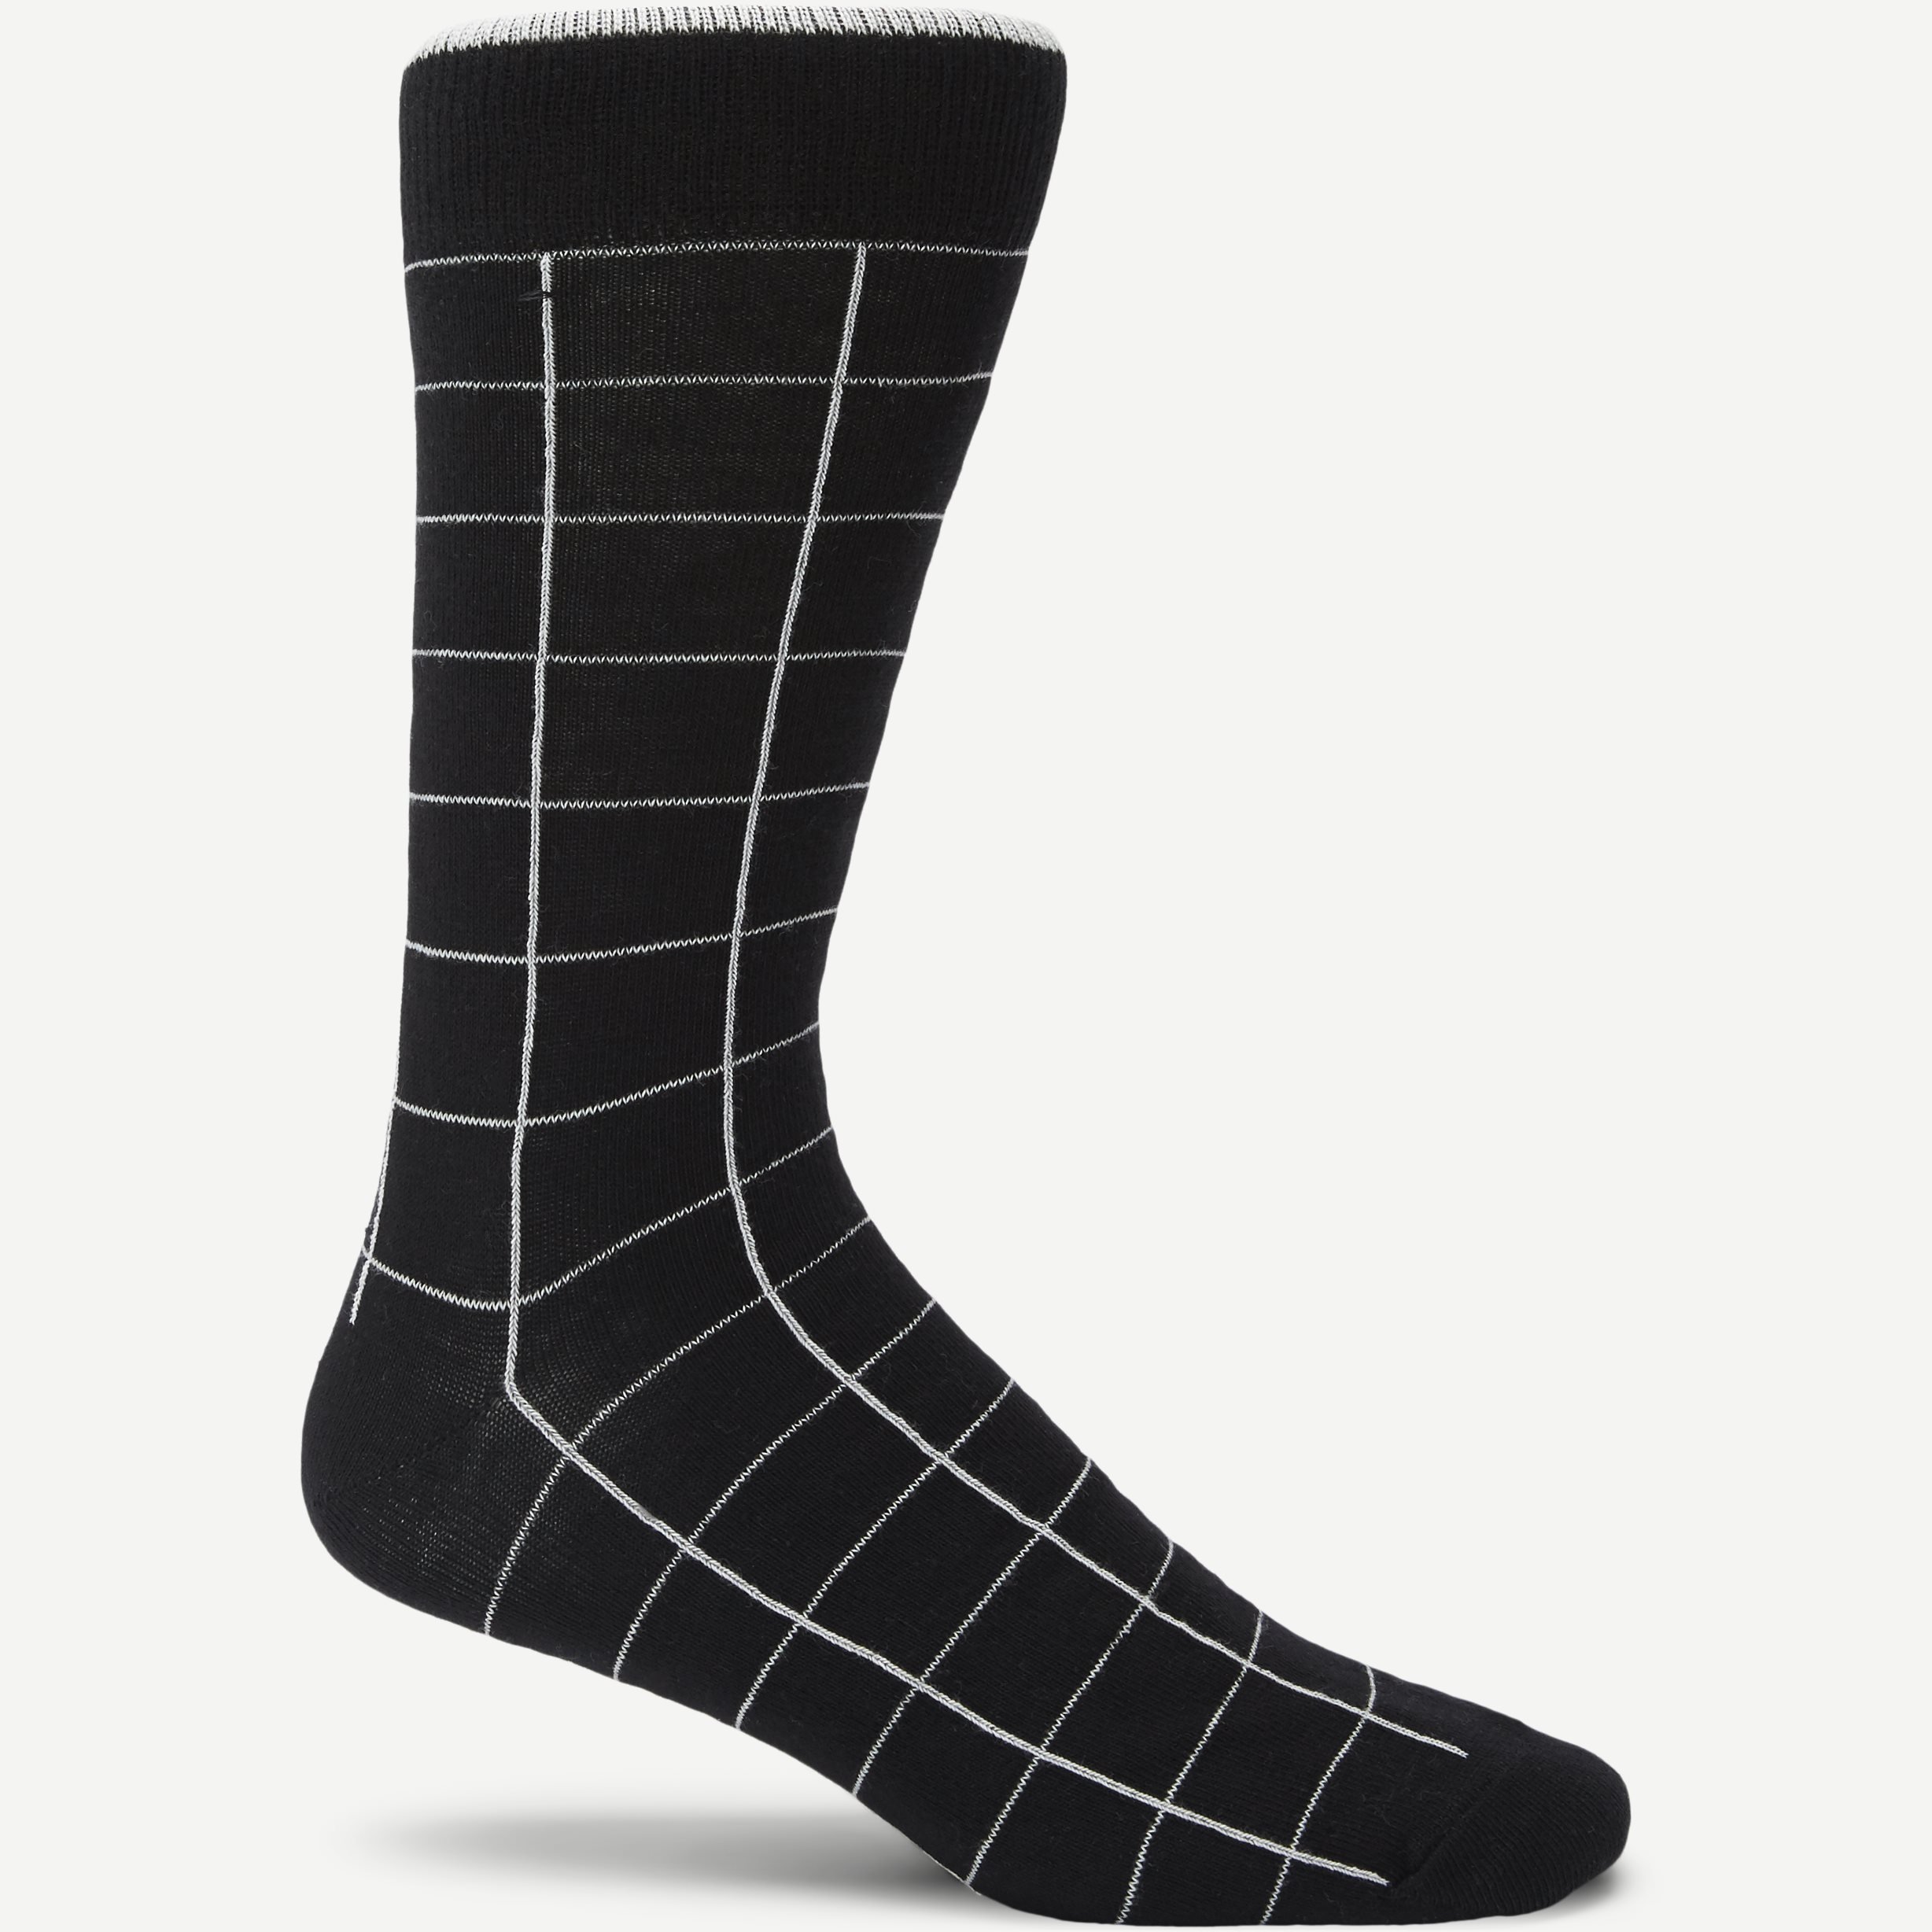 Arthur Soccer - Socks - Black